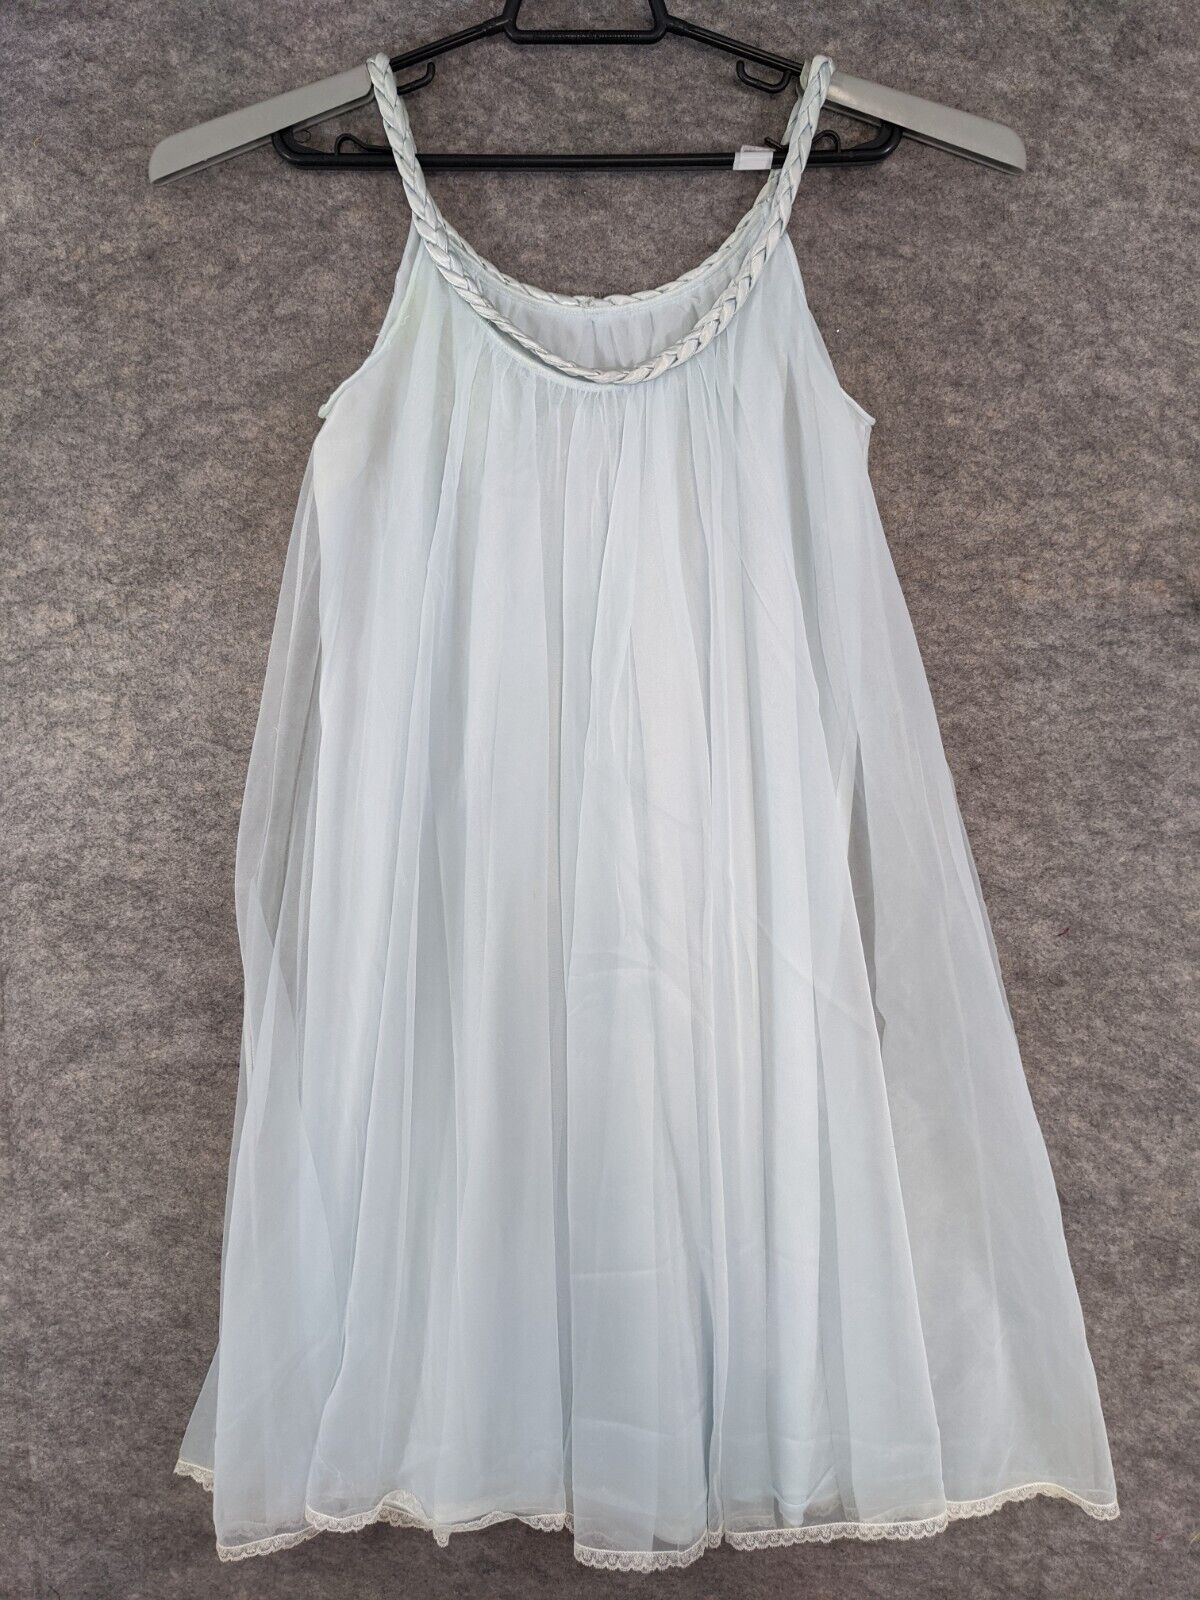 Vintage Chevette Nightgown Womens Small Blue Sheer Nylon Lined Short Babydoll